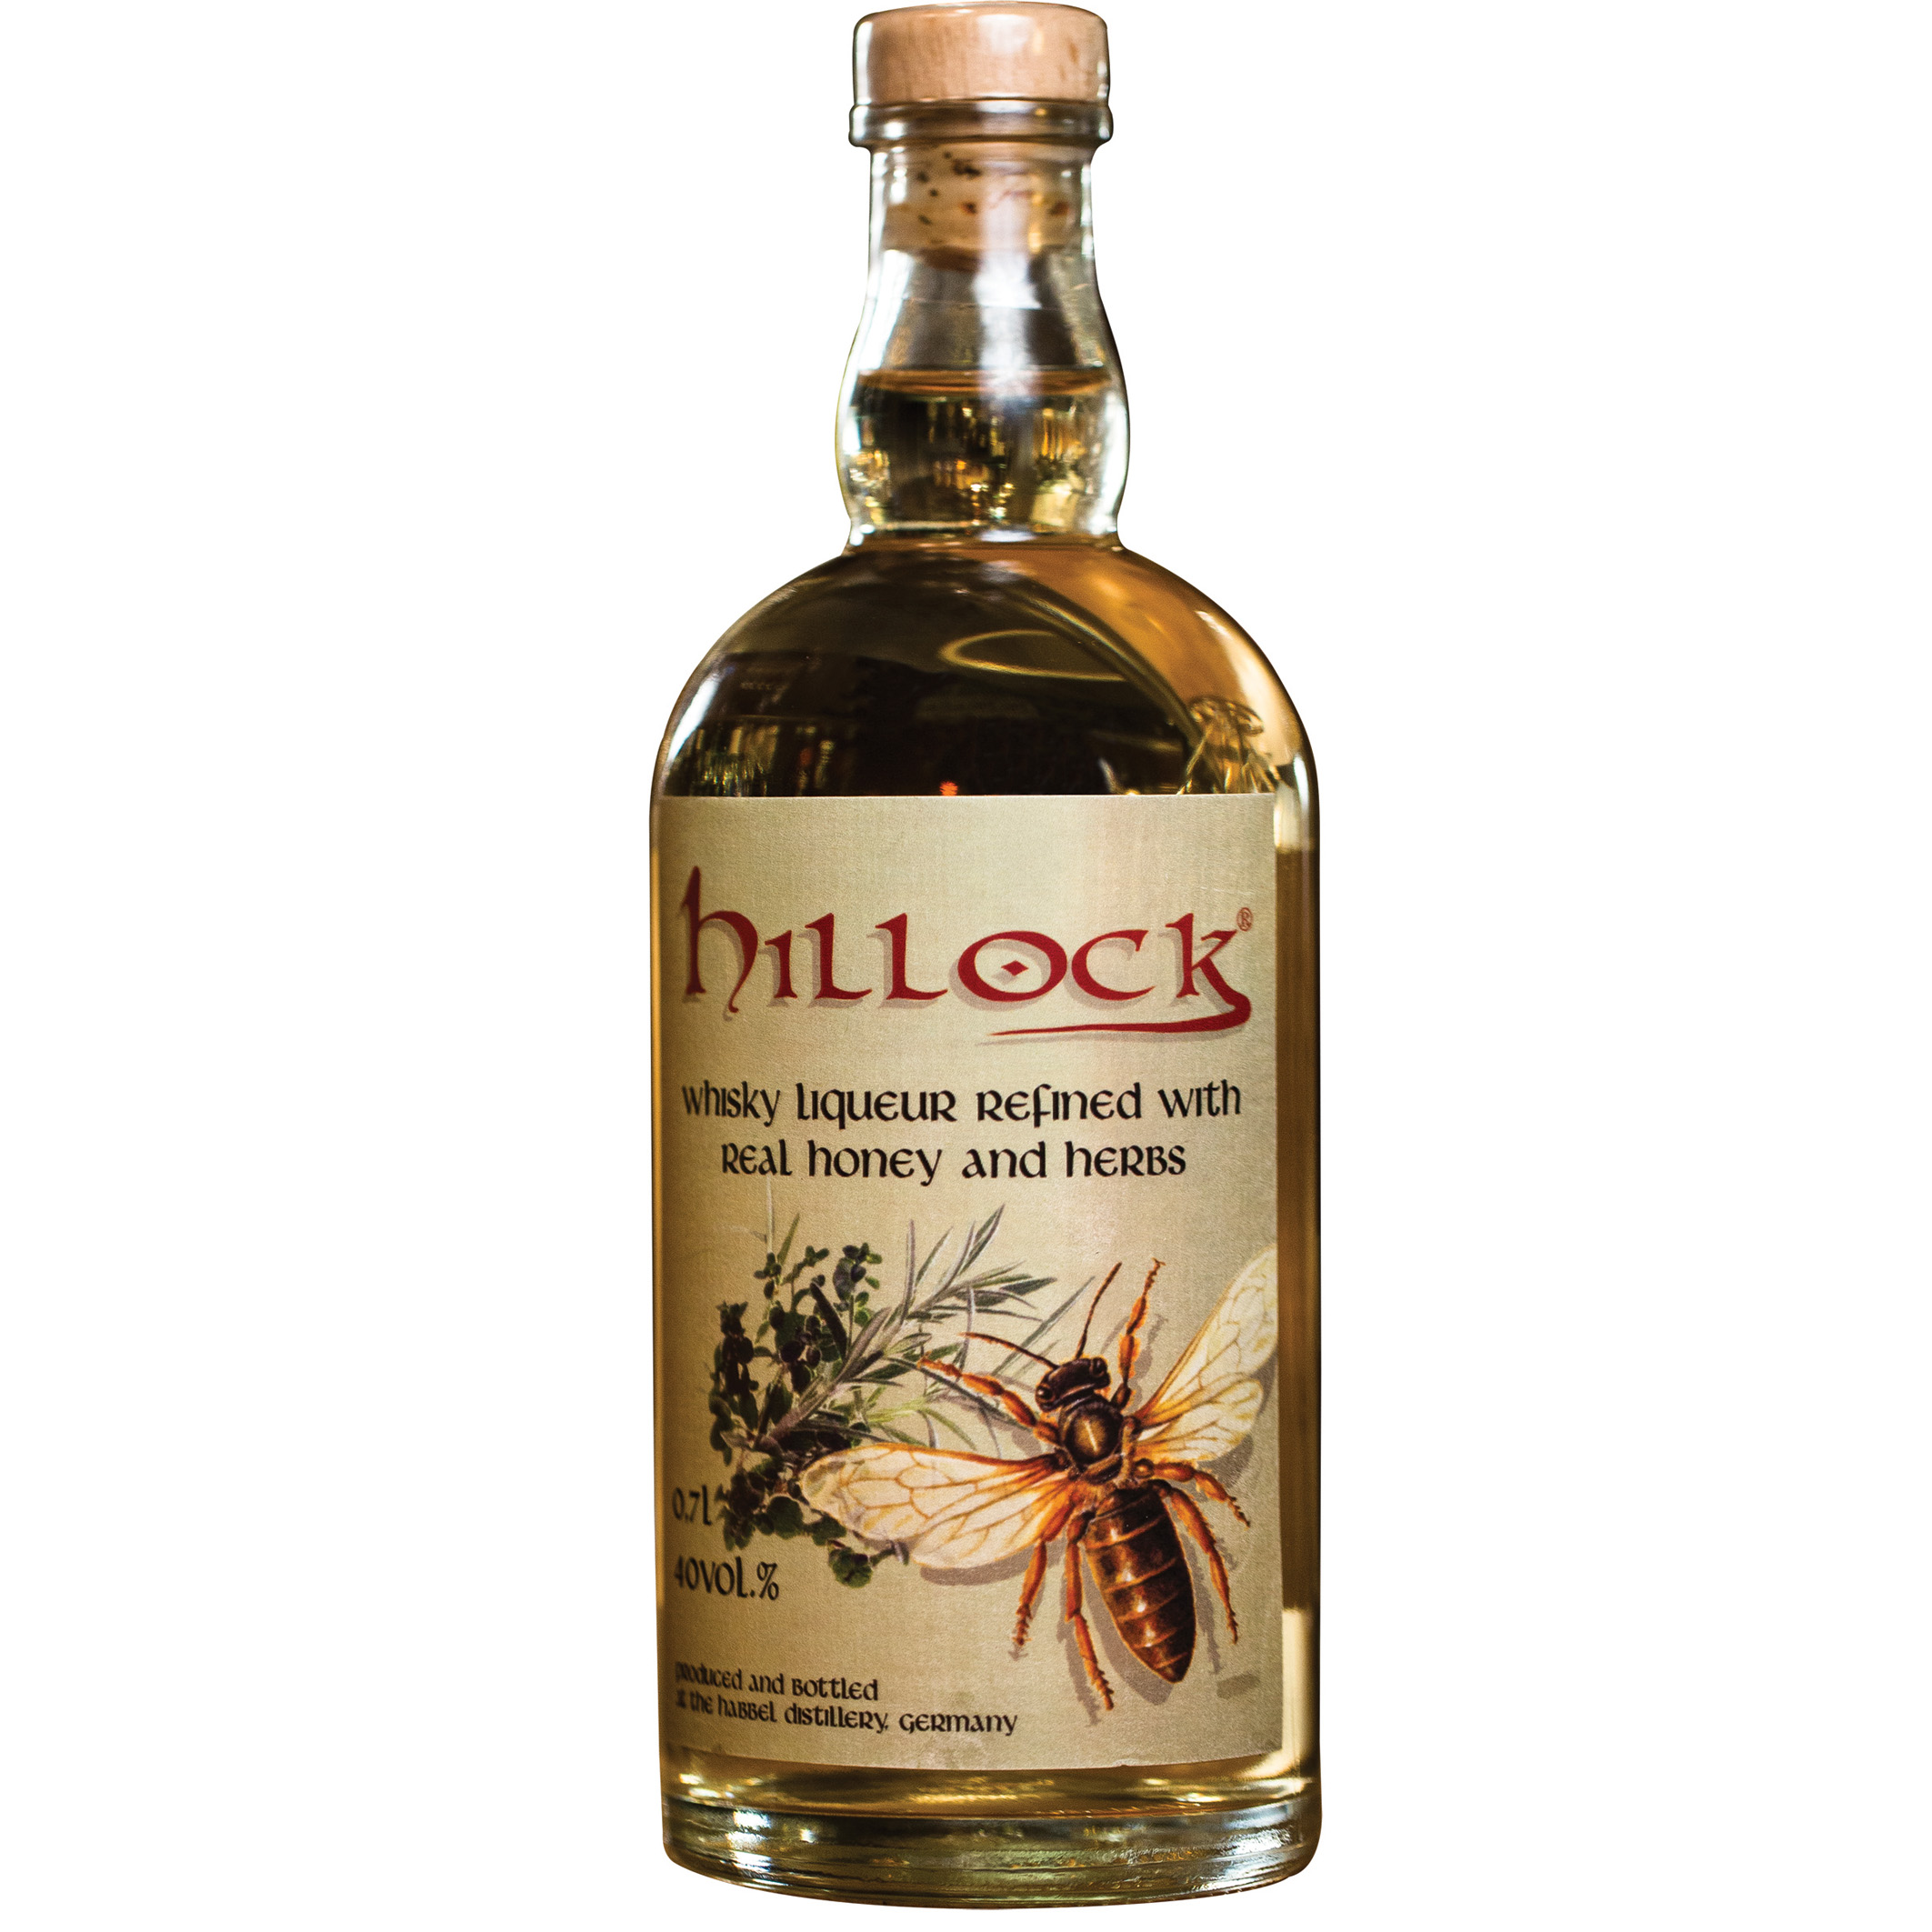 Hillock Honey and Herbs-Shop